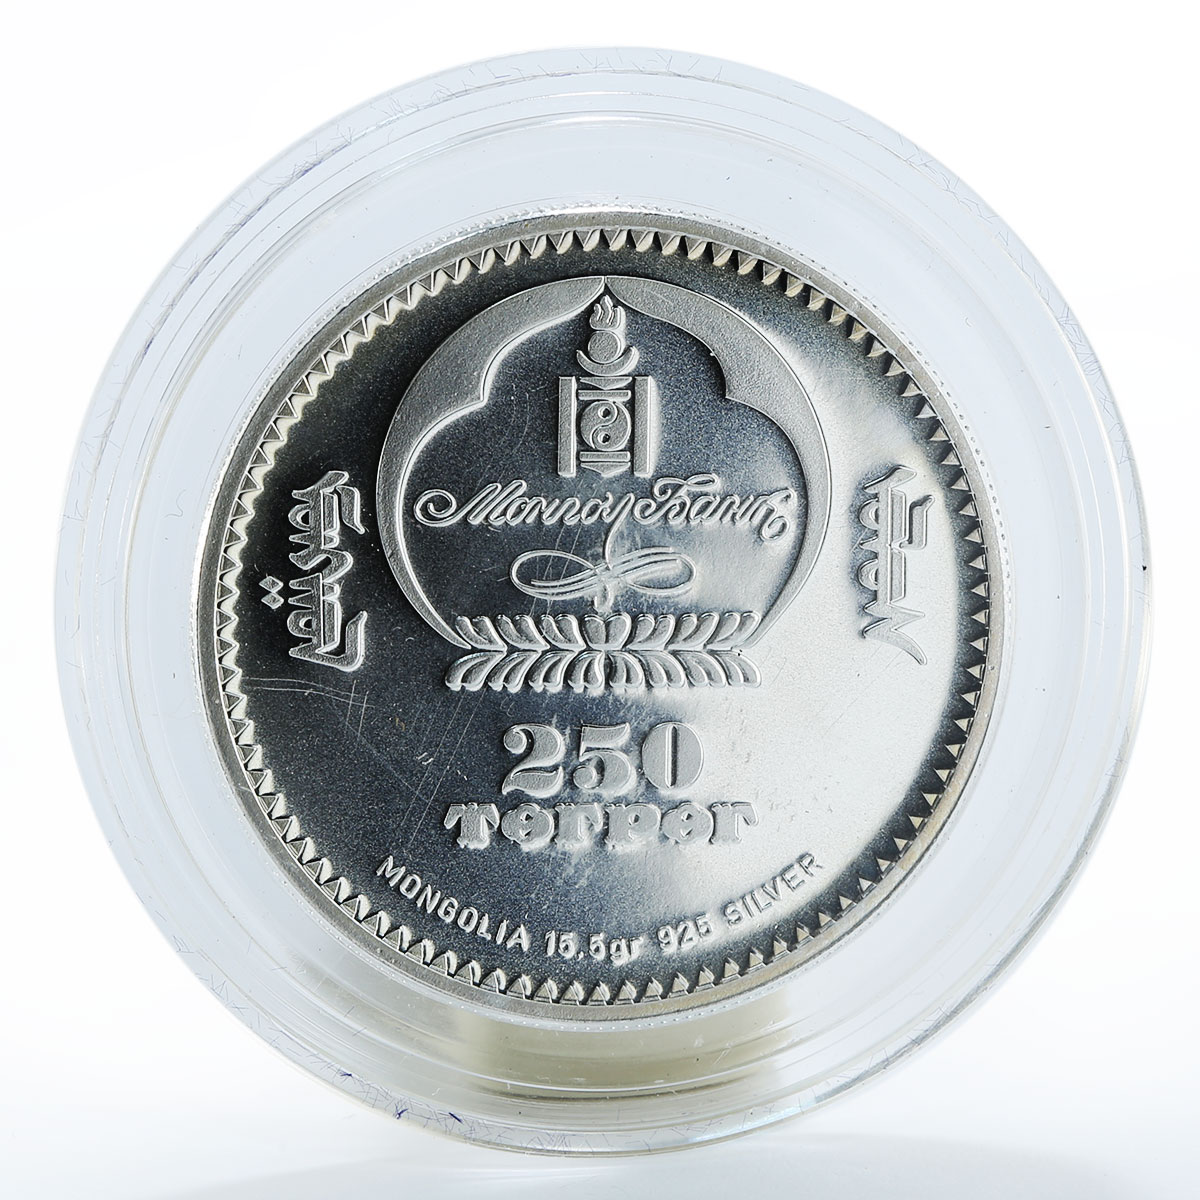 Mongolia 250 tugriks Aquarius Zodiac gilded silver 1/2 oz coin 2007